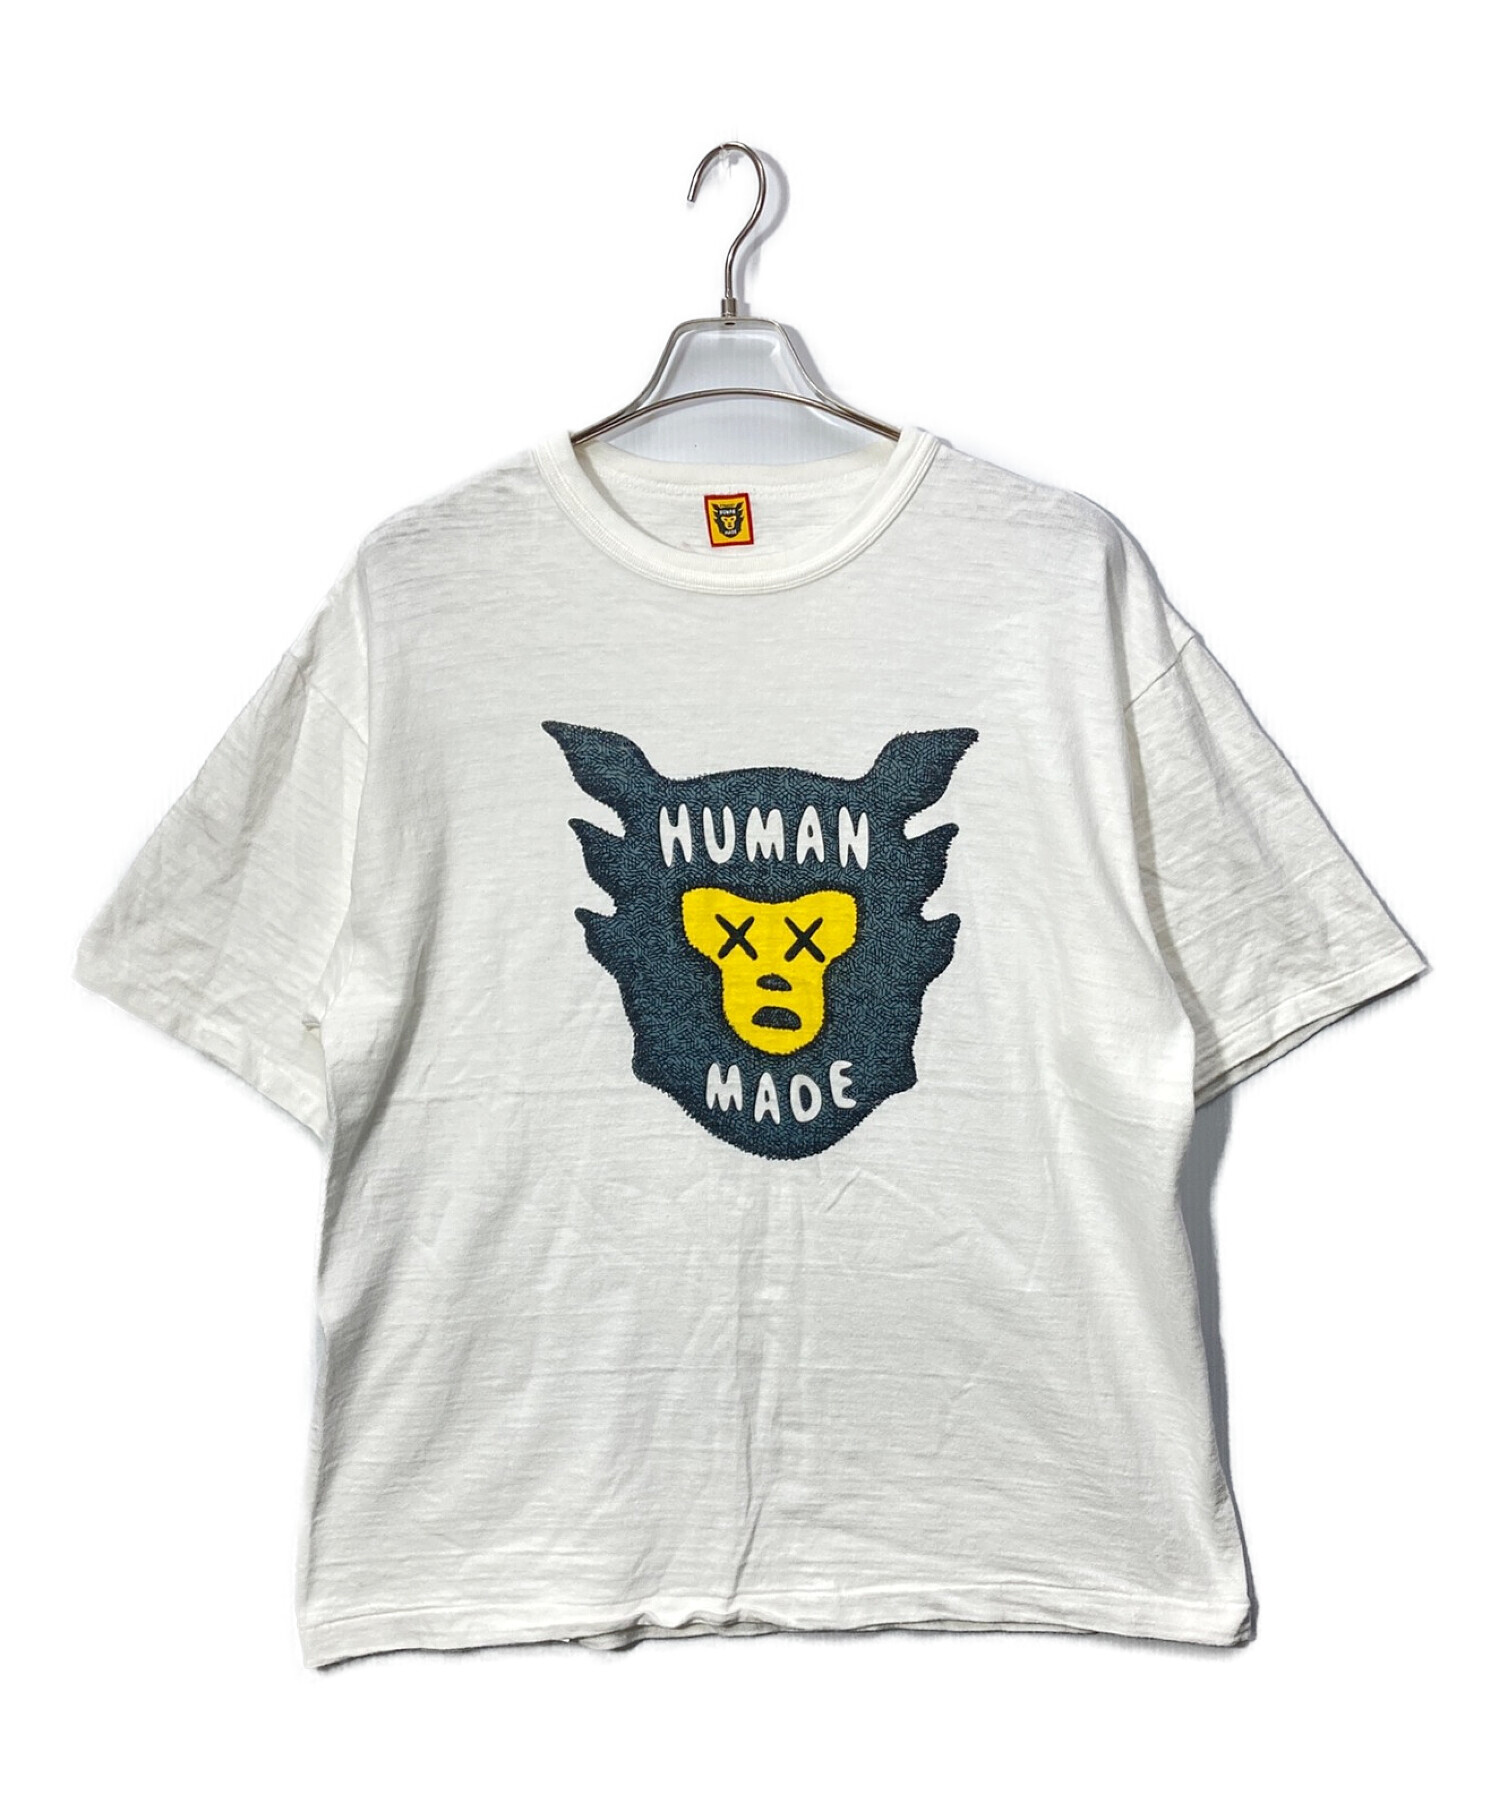 Tシャツ/カットソー(半袖/袖なし)HUMAN MADE KAWS T-SHRIT #2 "White" Lサイズ